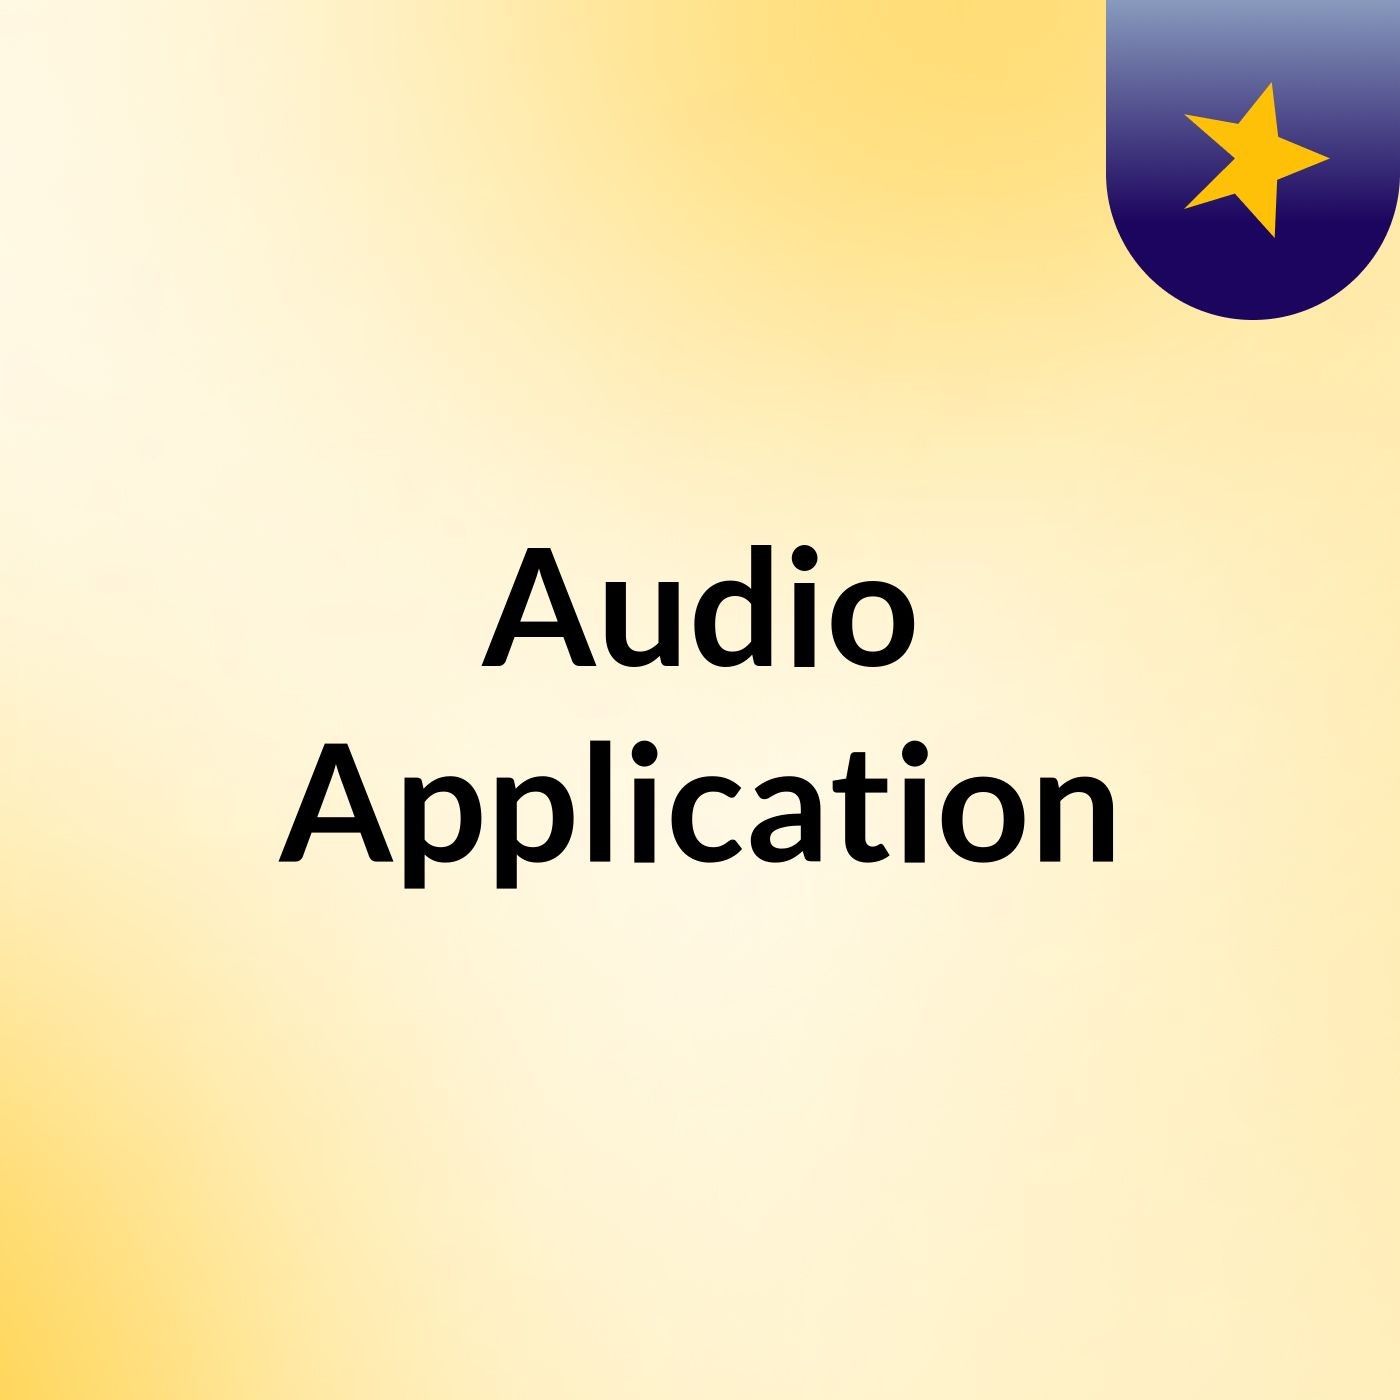 Audio Application